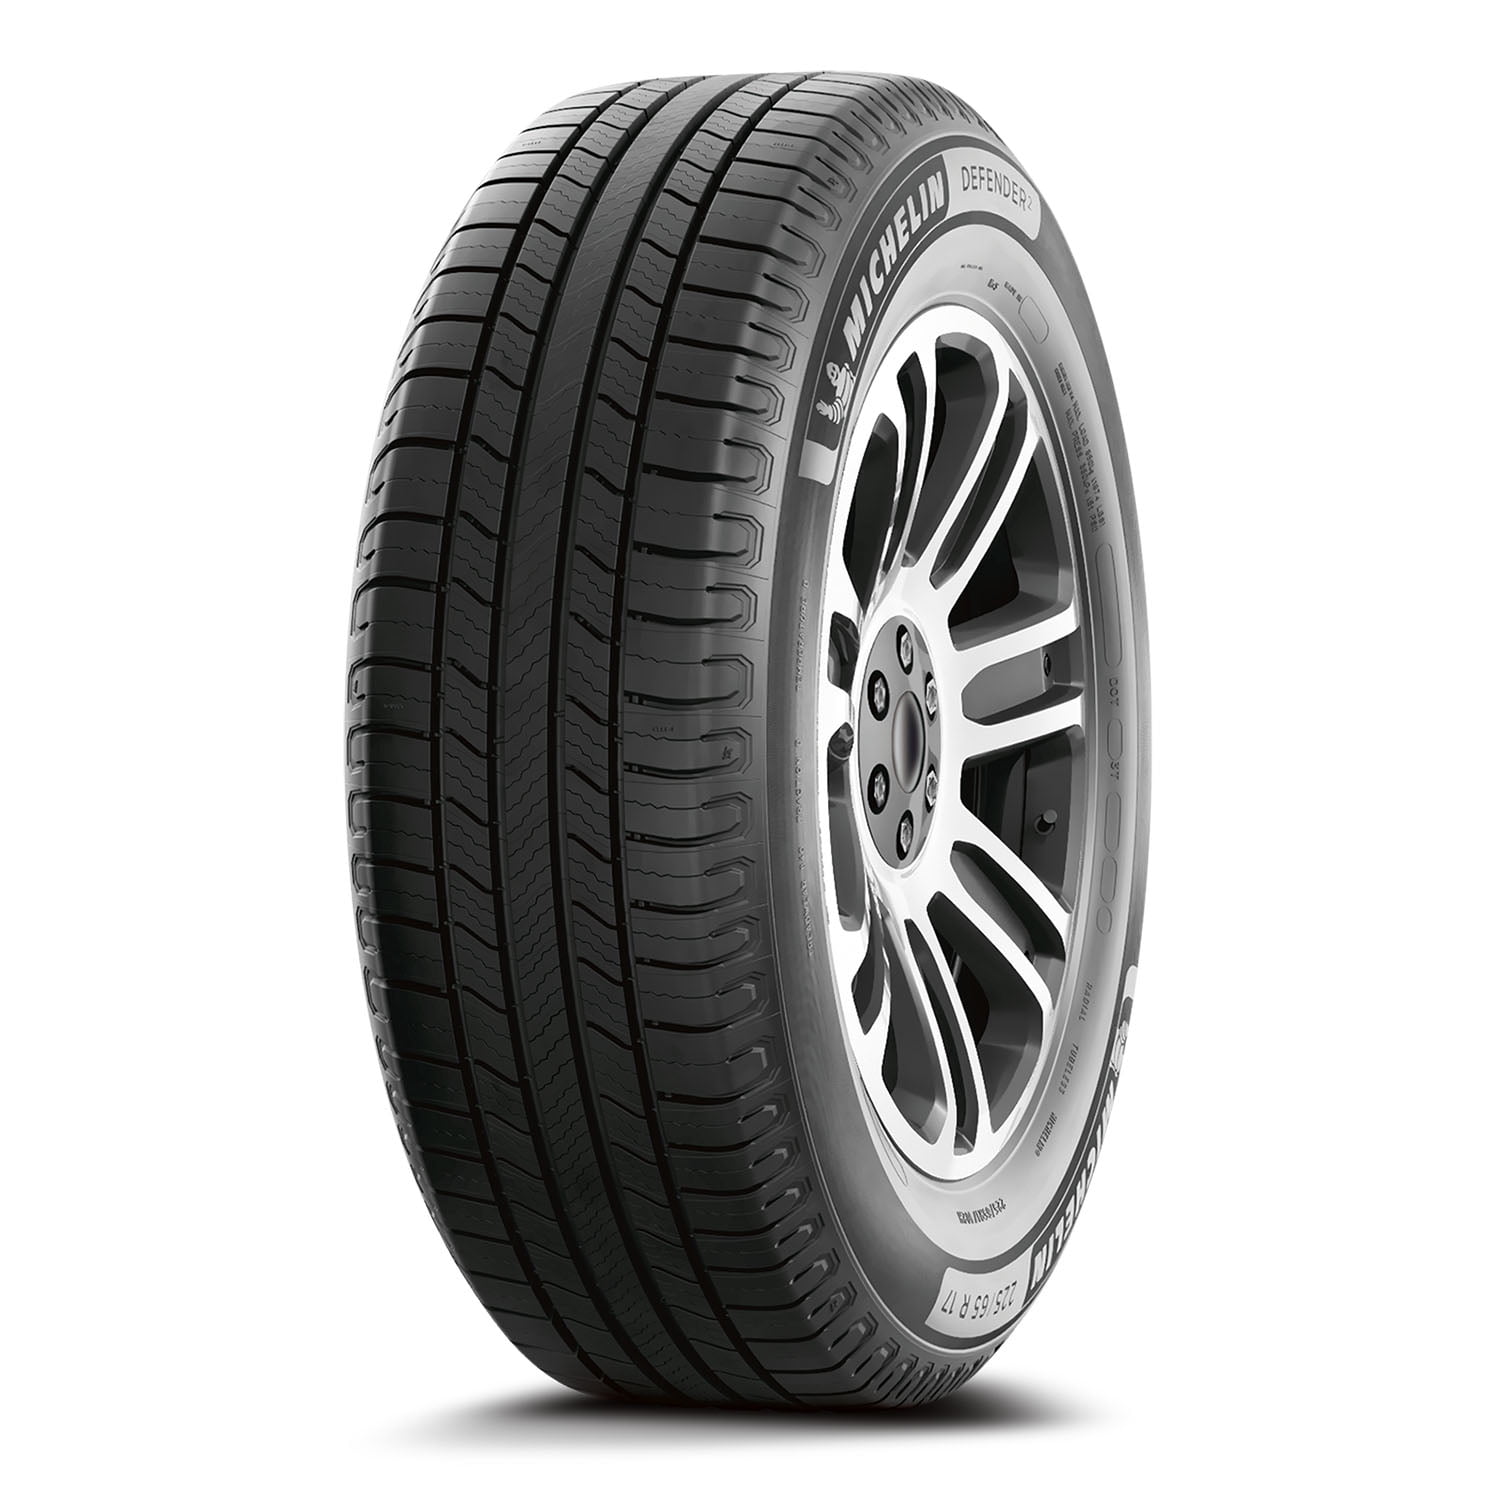 Michelin Defender 2 All Season 215/65R16 98H Passenger Tire